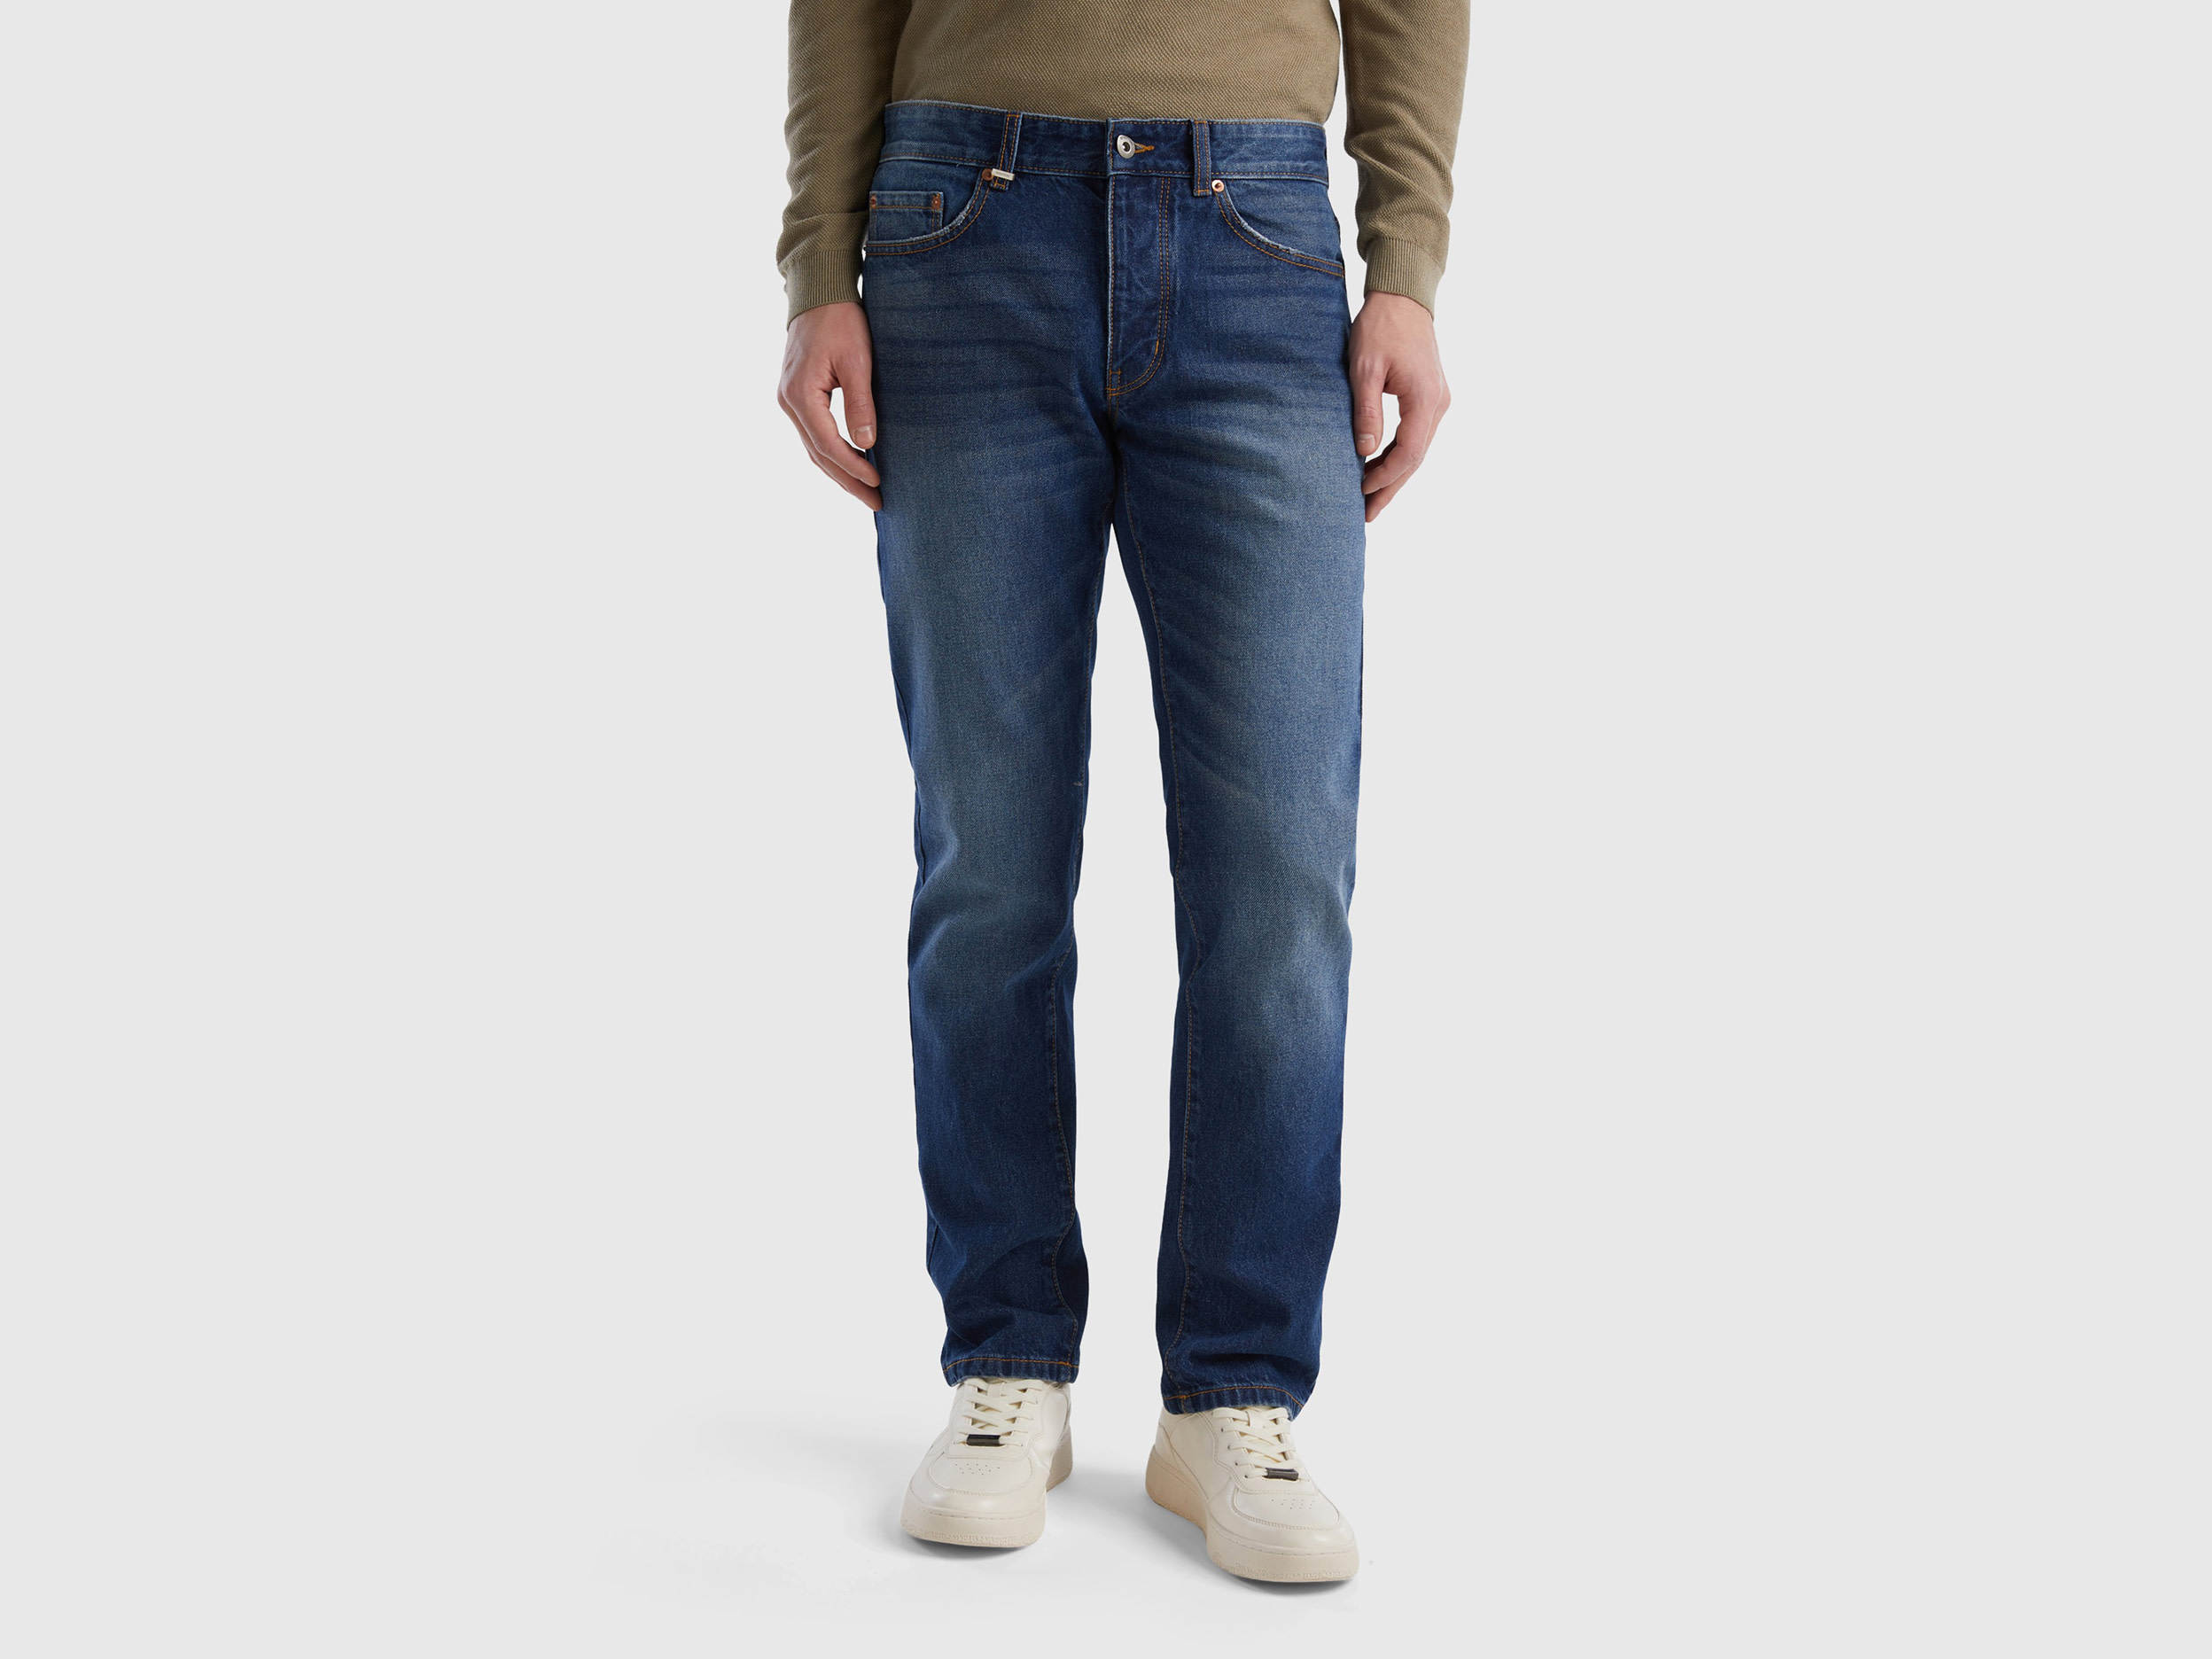 Benetton, Straight Fit Jeans, size 28, Dark Blue, Men